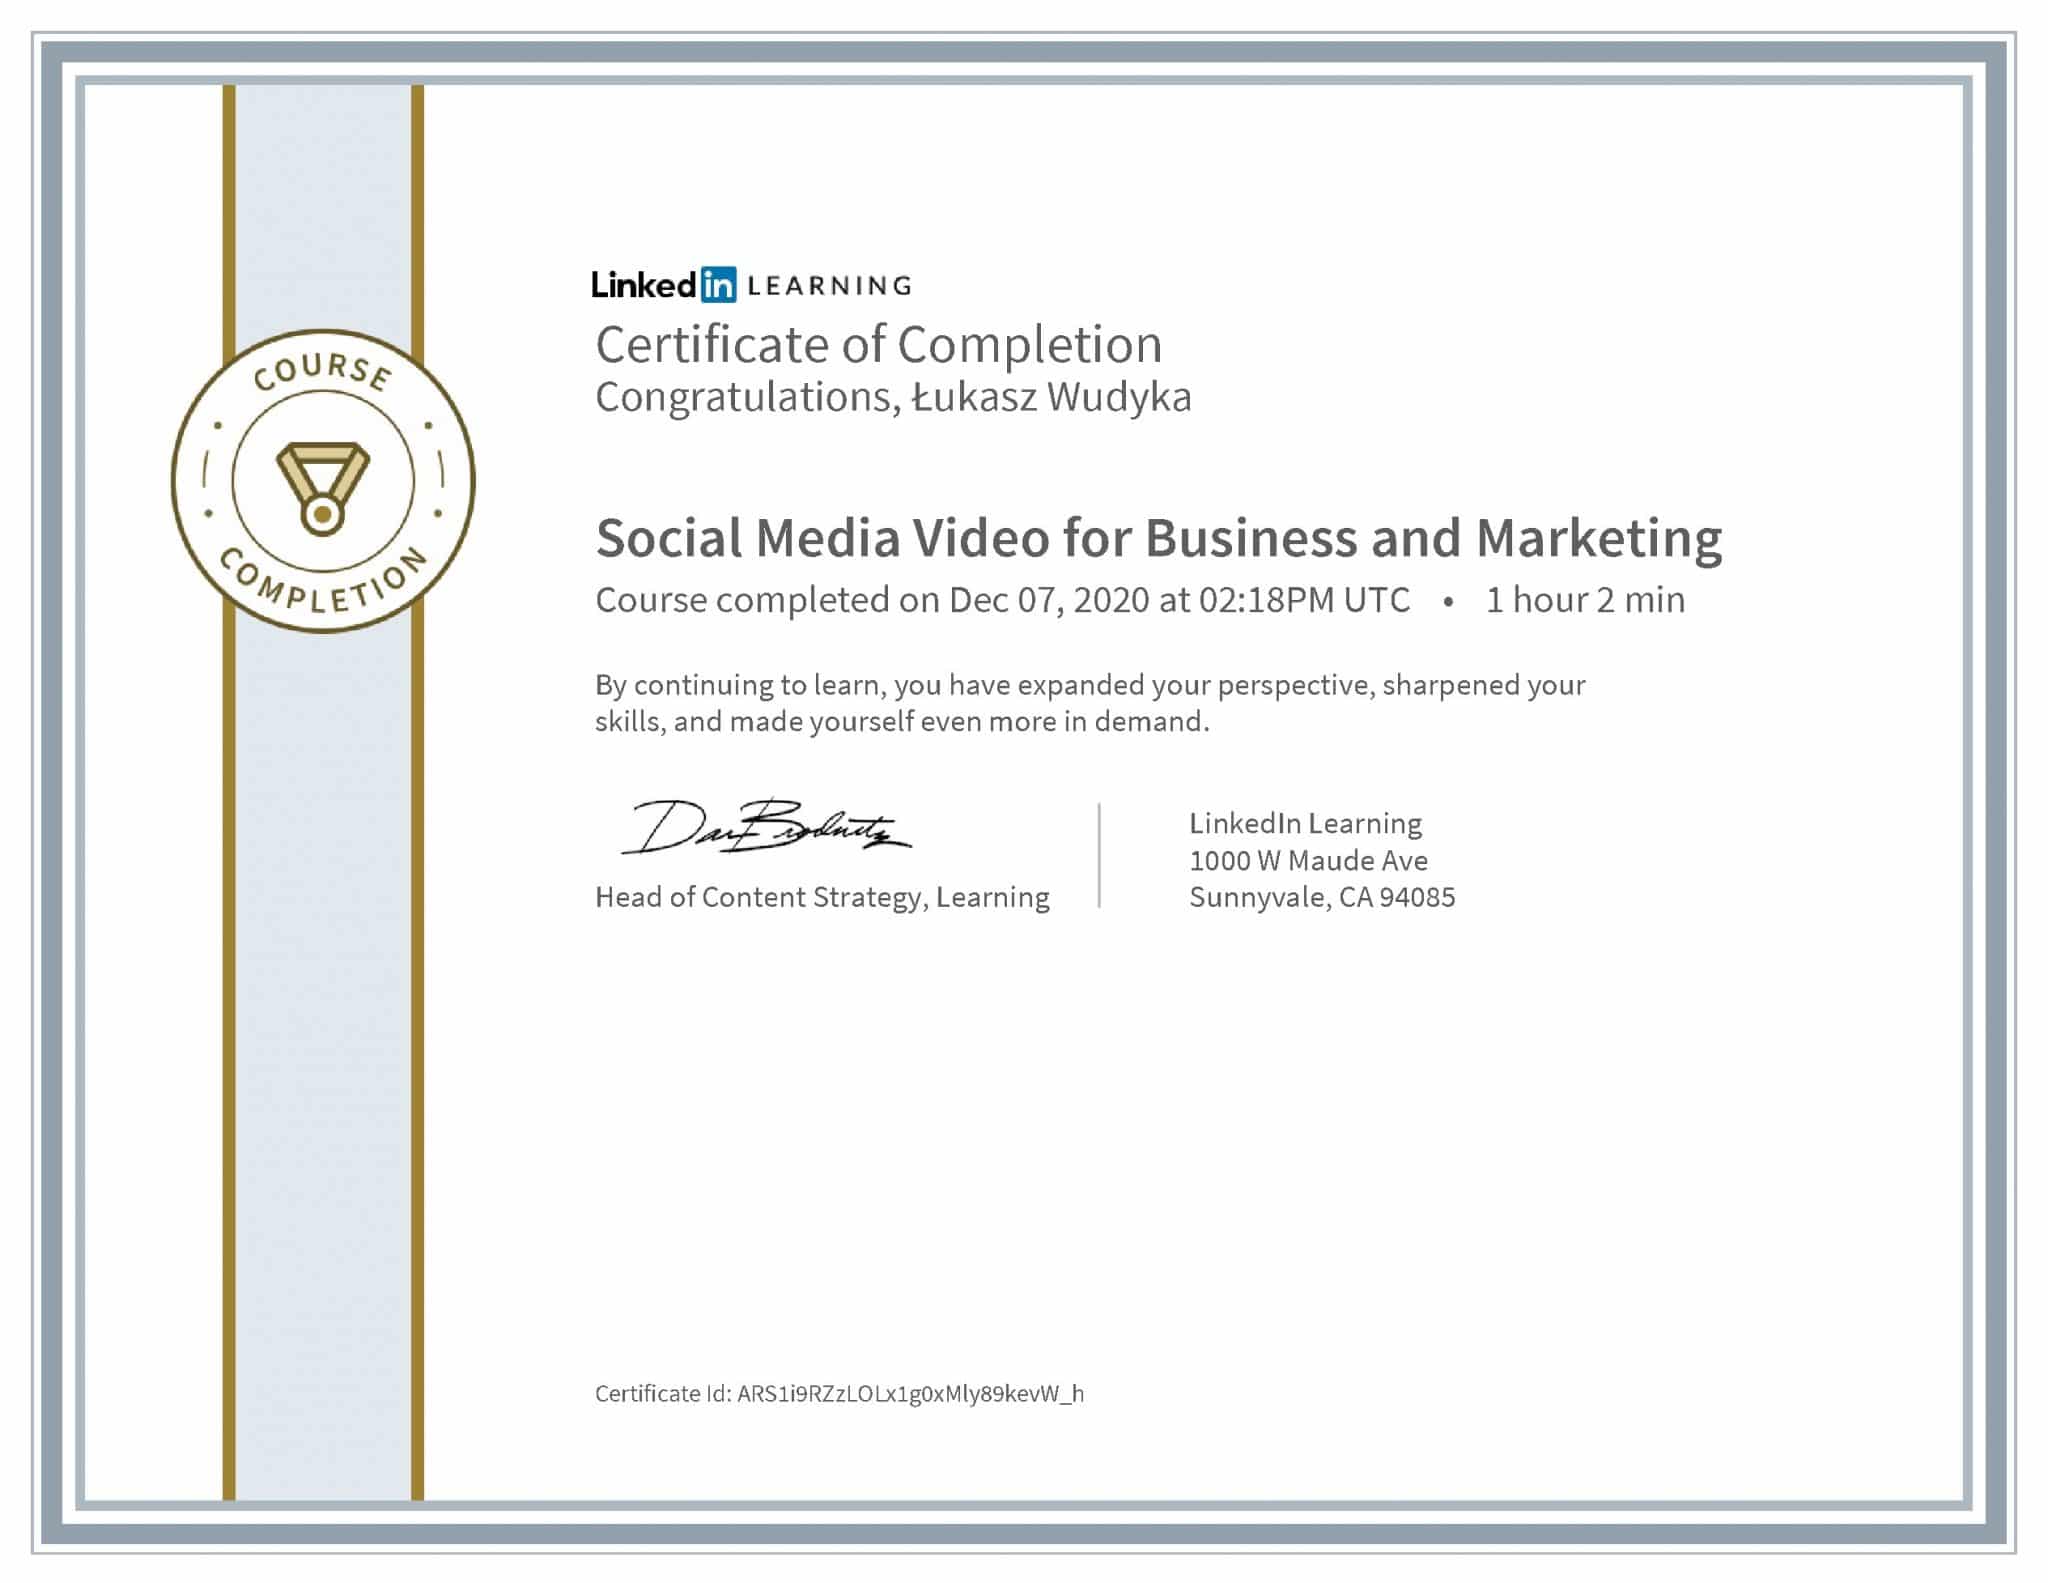 Łukasz Wudyka certyfikat LinkedIn Social Media Video for Business and Marketing